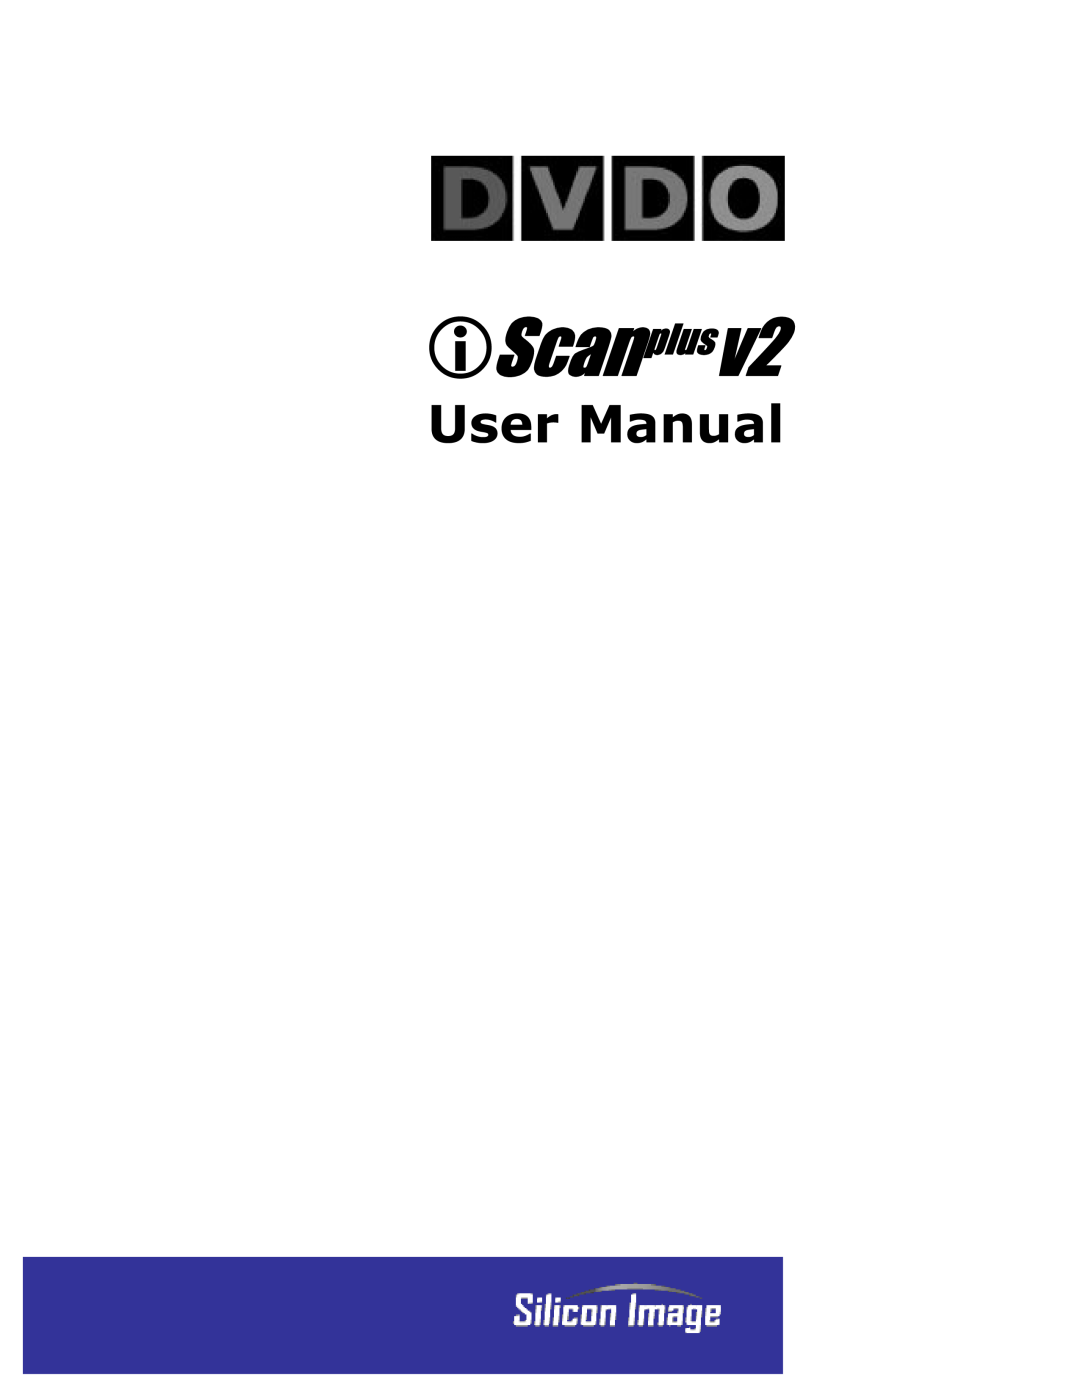 DVDO iScanPlus V2 manual L6FDQSOXVY, 8VHU0DQXDO 